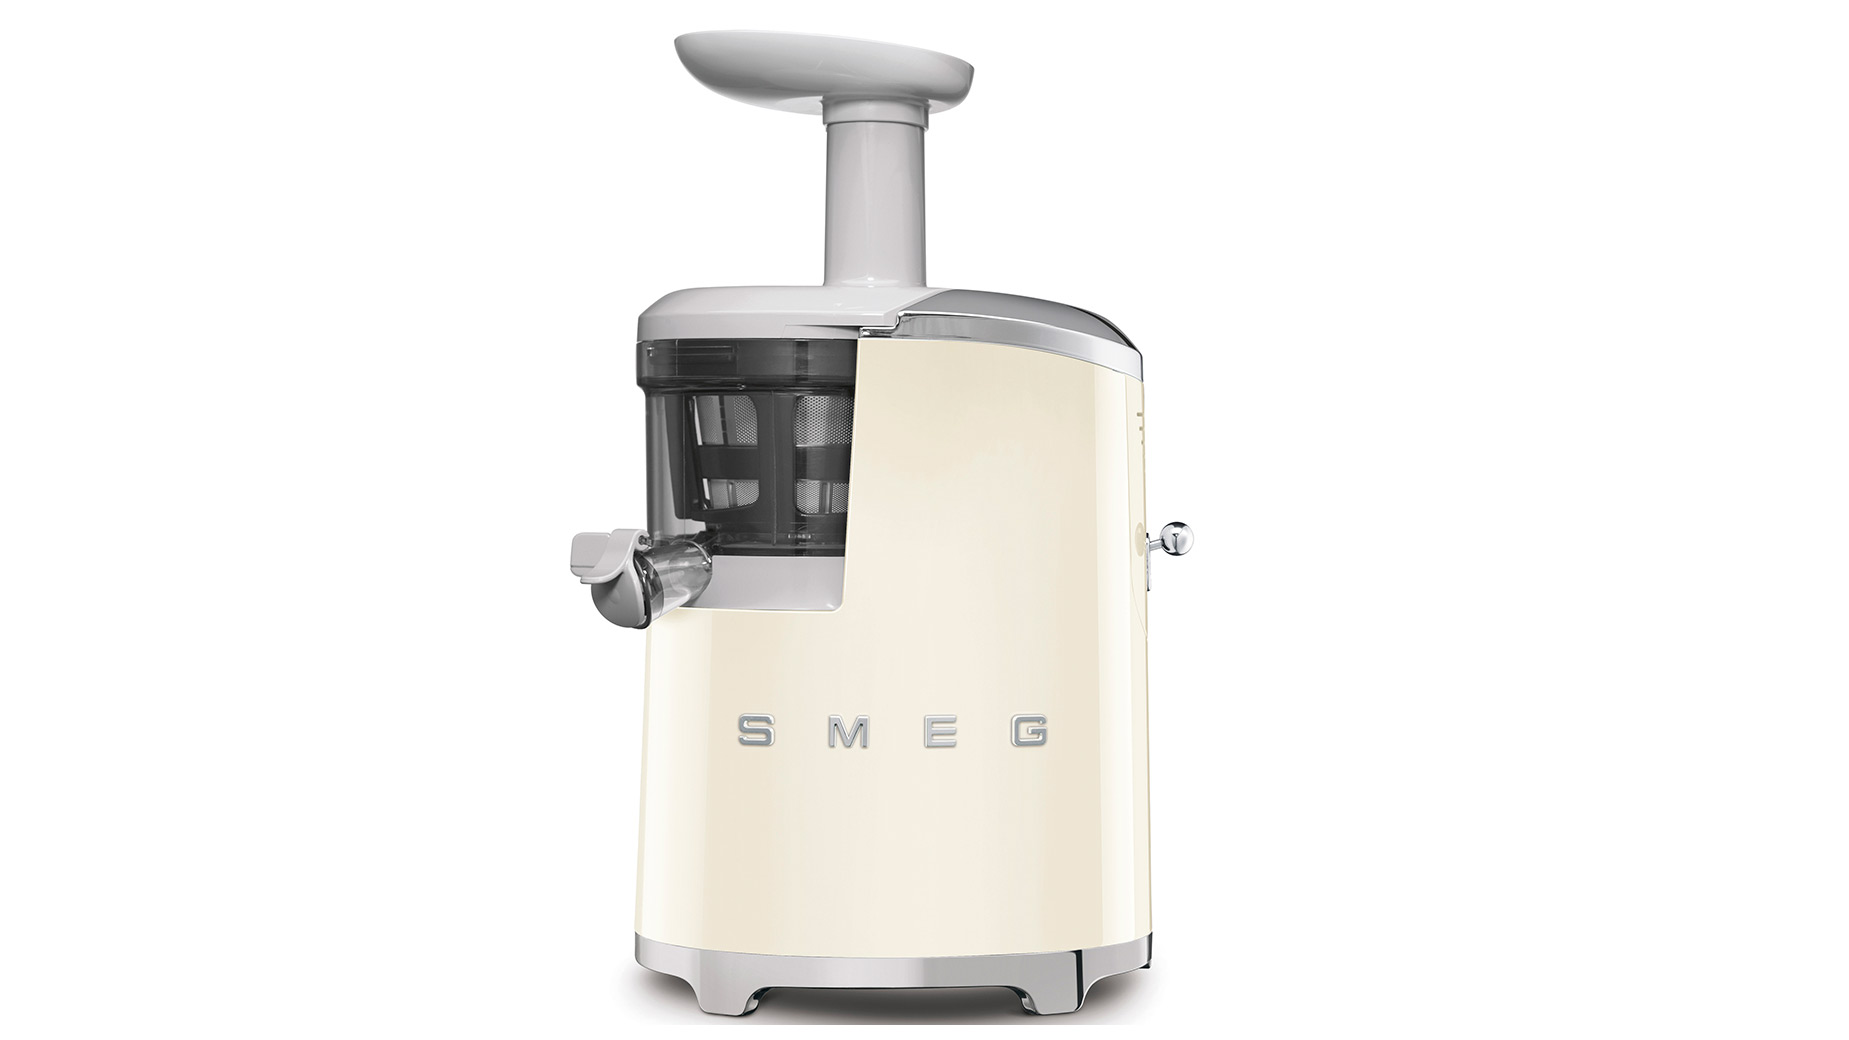 The Smeg SJF01 slow juicer on a white background